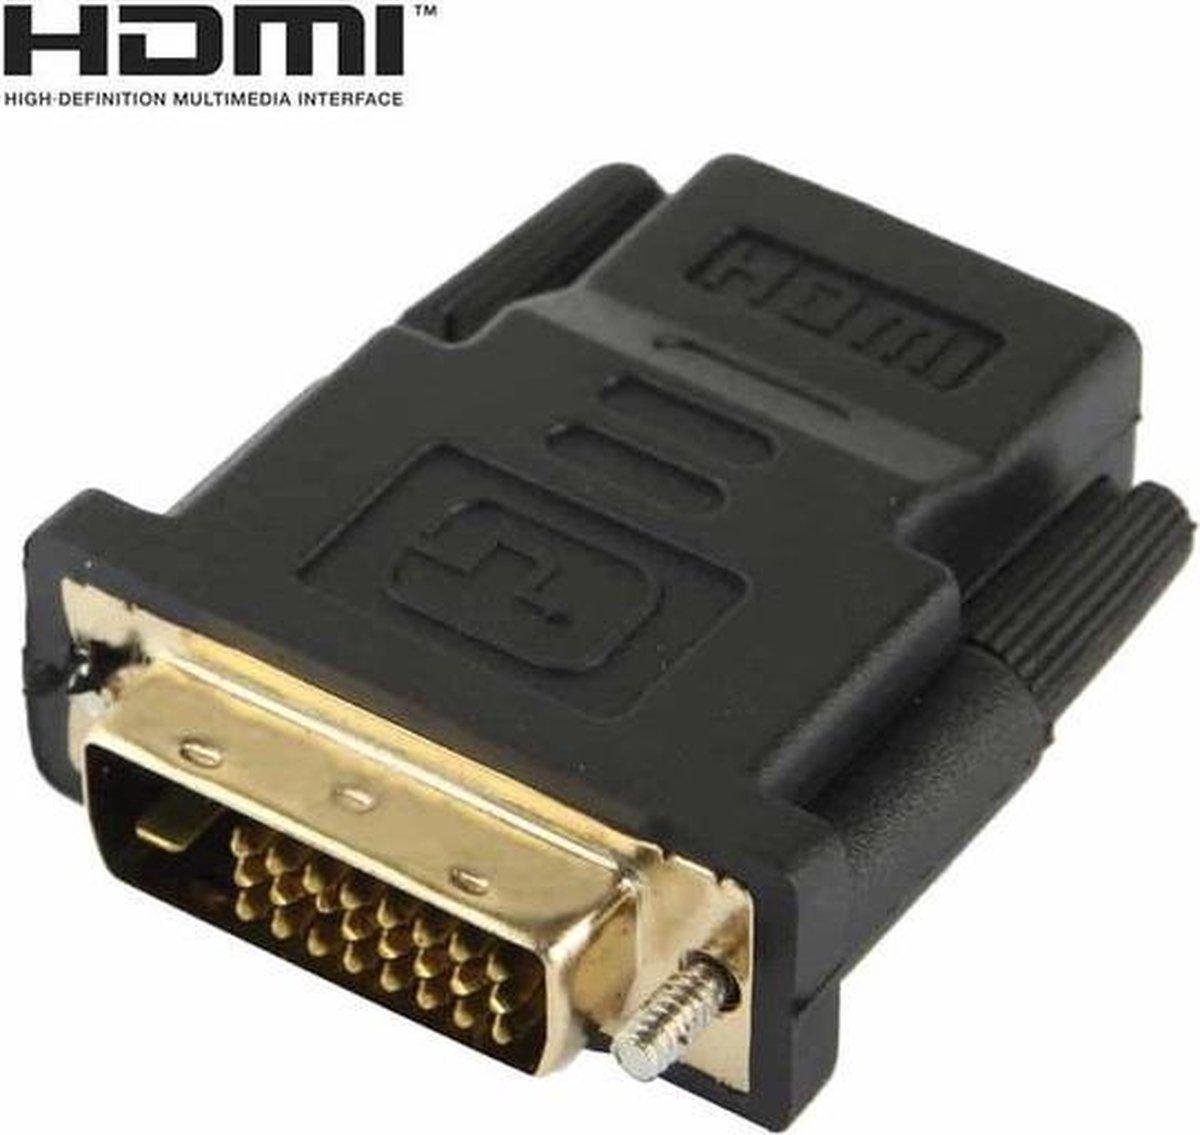 Techvavo® DVI 24+1 naar HDMI Adapter - DVI 24+1 Male to HDMI Female Converter - 1080P